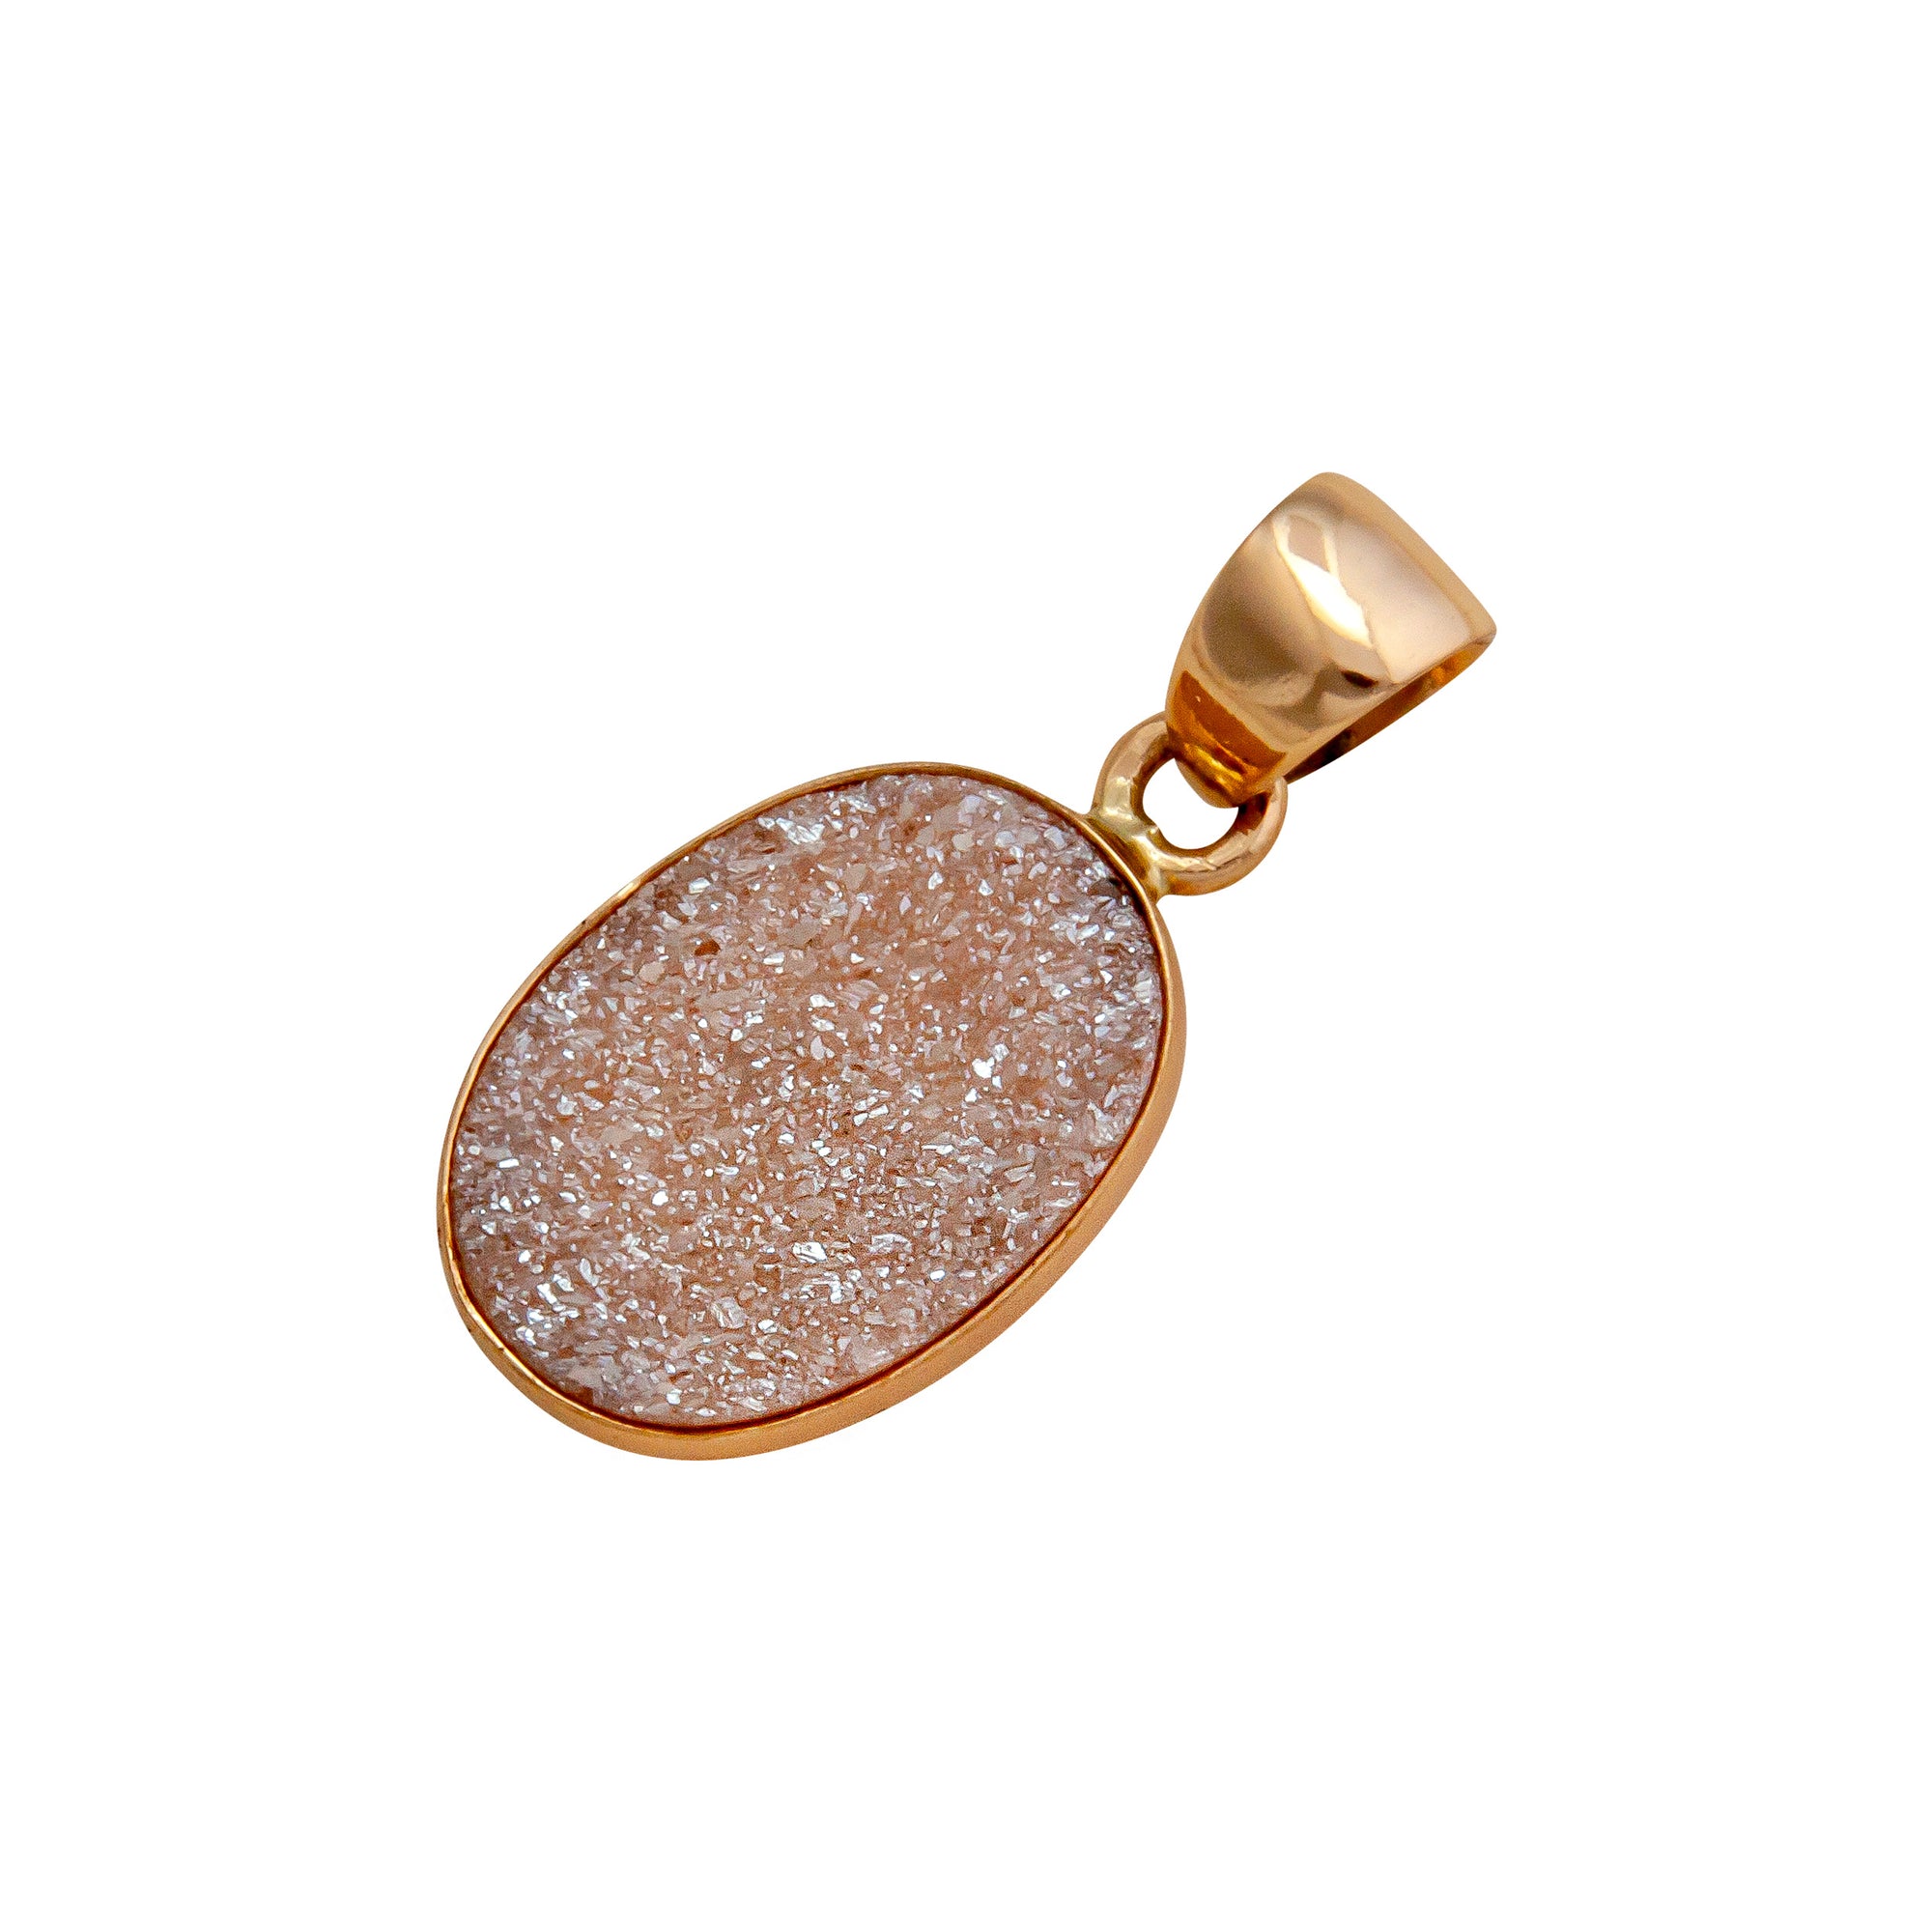 Alchemia Peach Druse Oval Pendant | Charles Albert Jewelry